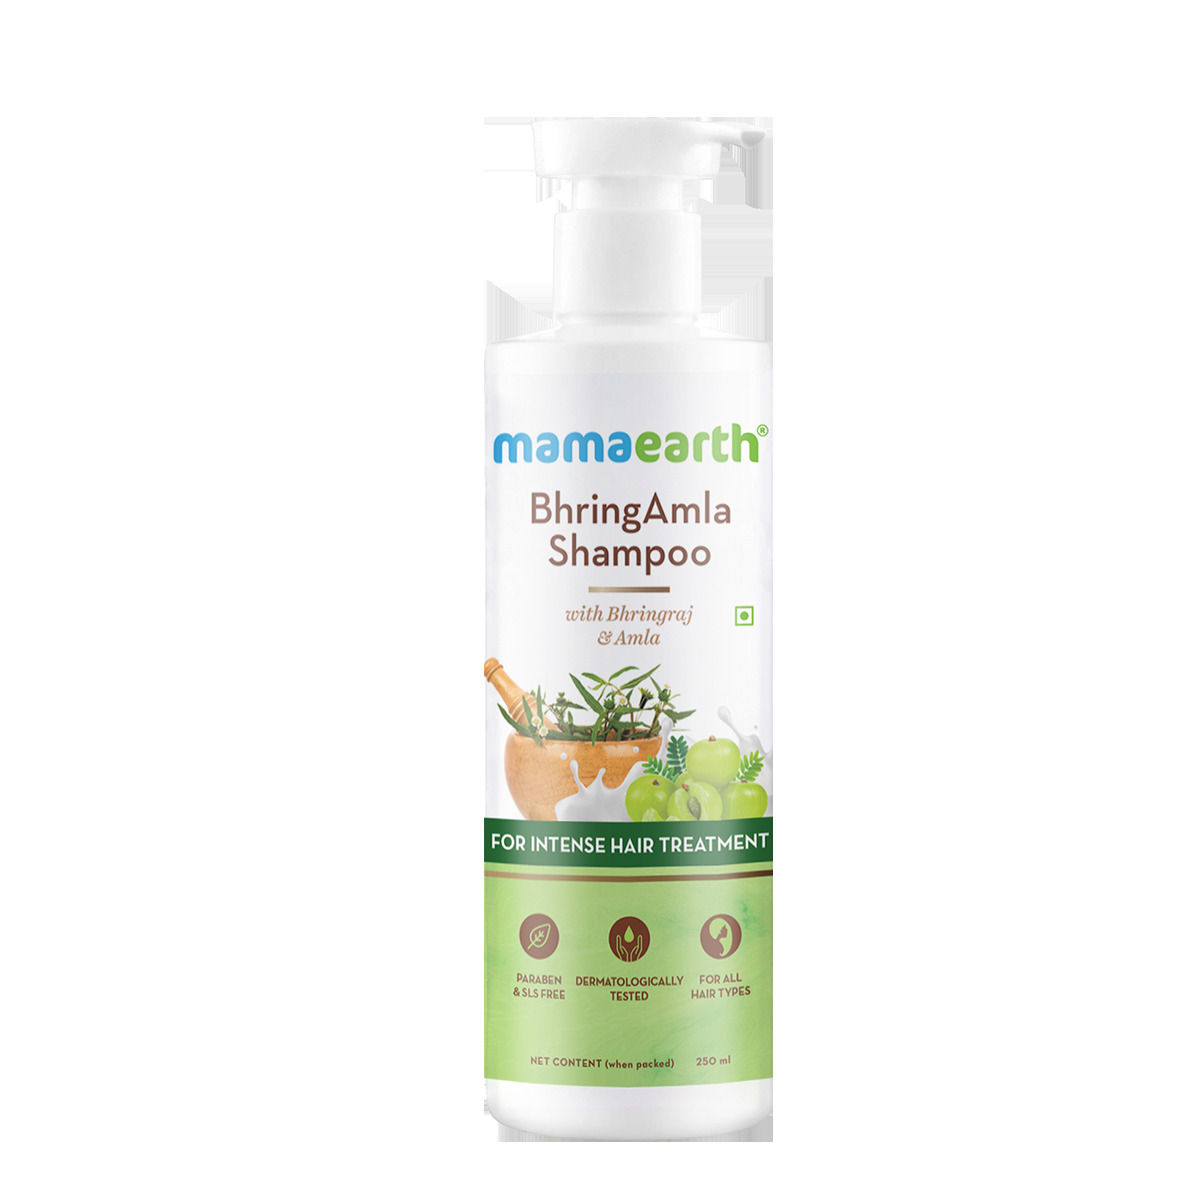 Mamaearth Bhring Amla Shampoo, 250 ml, Pack of 1 